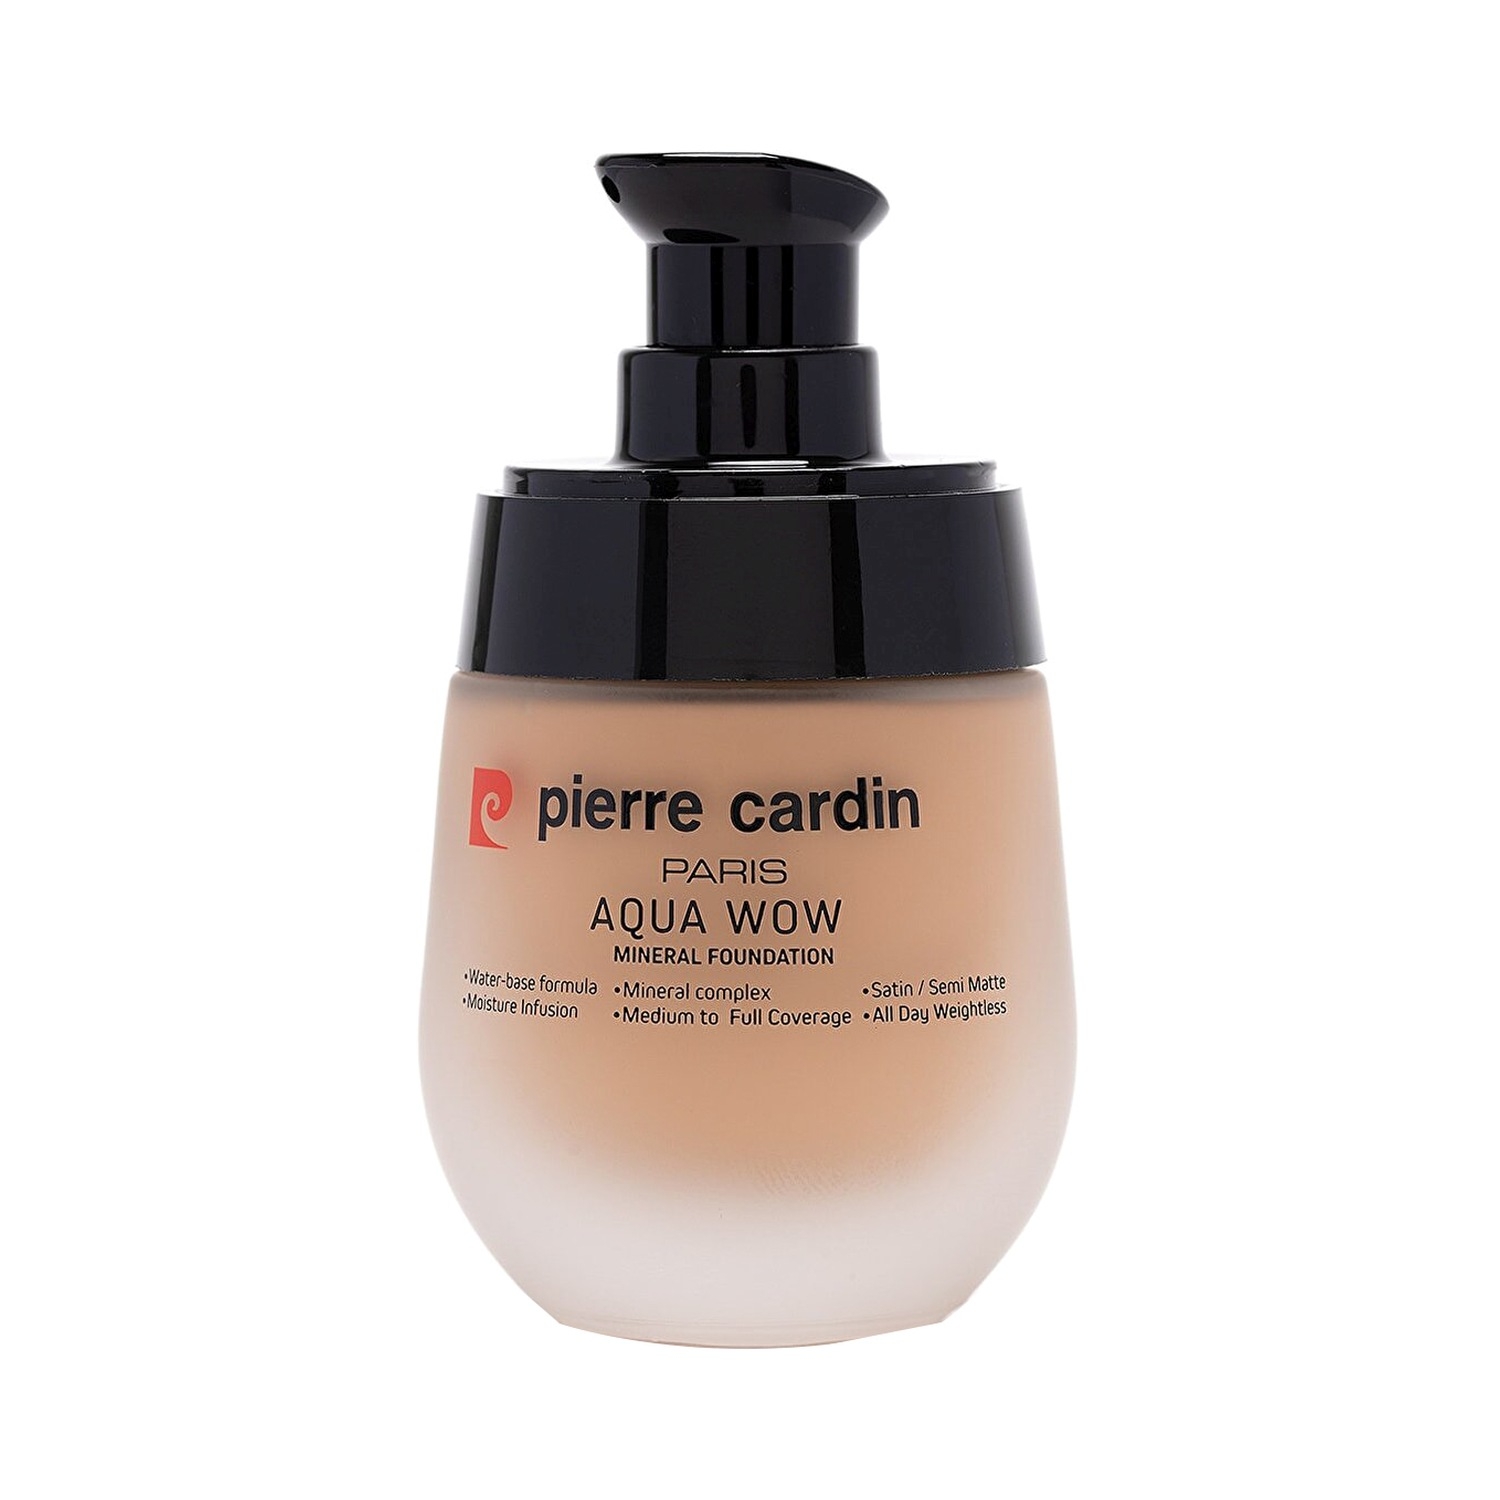 Pierre Cardin Paris | Pierre Cardin Paris Aqua Wow Mineral Foundation - 802 Tan Skin With Beige Warm (30ml)